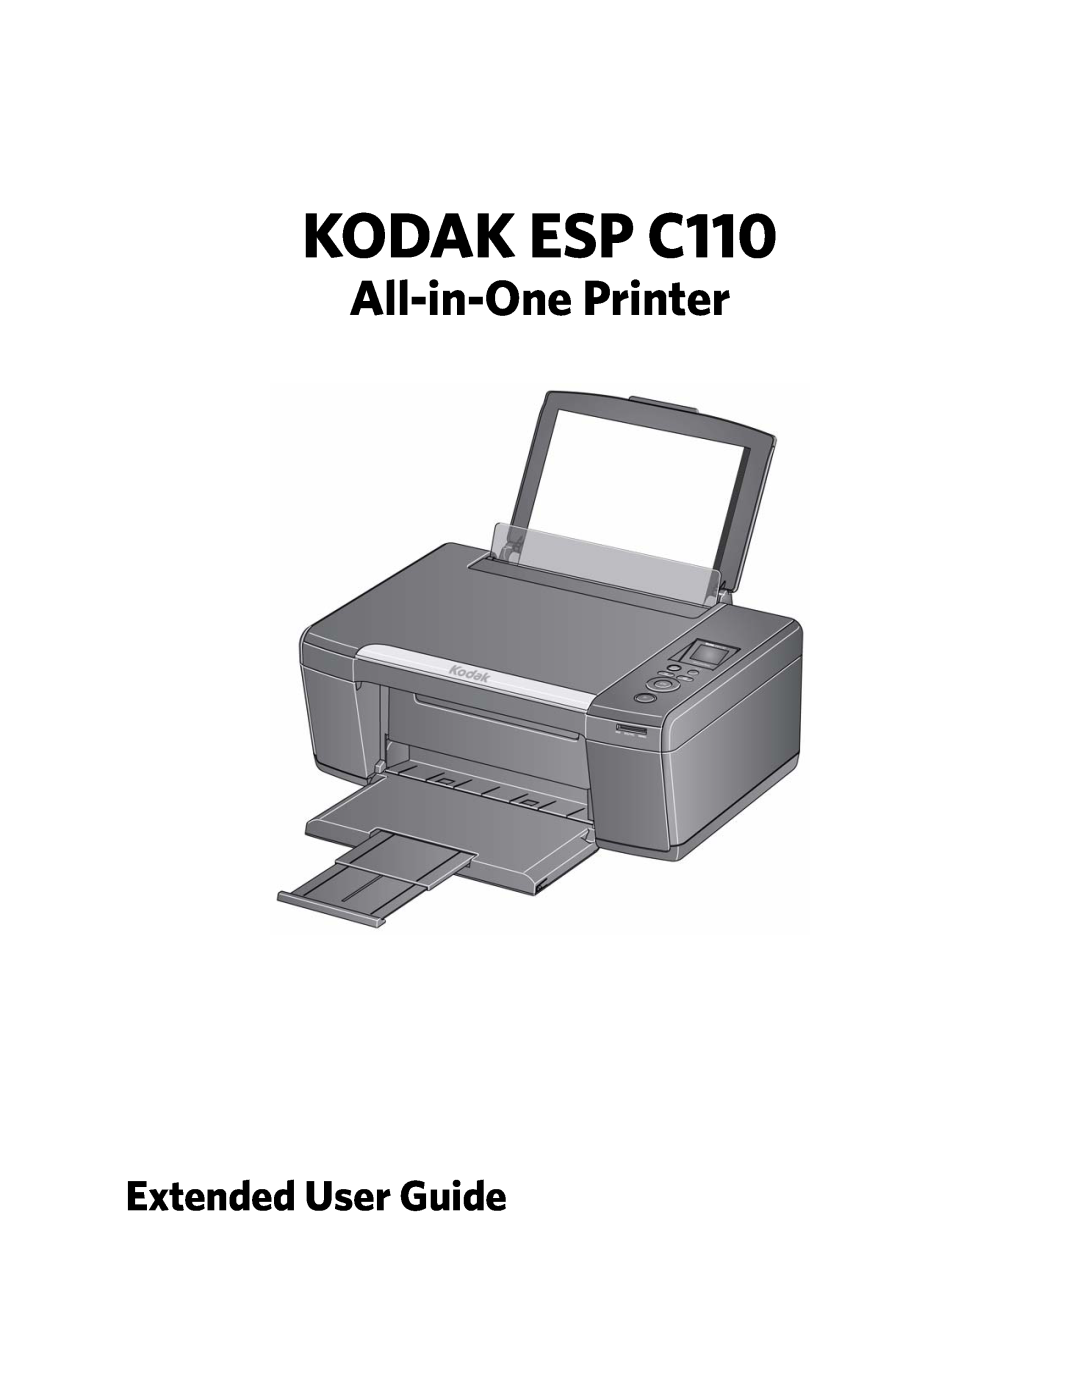 Kodak manual Extended User Guide, KODAK ESP C110, All-in-One Printer 